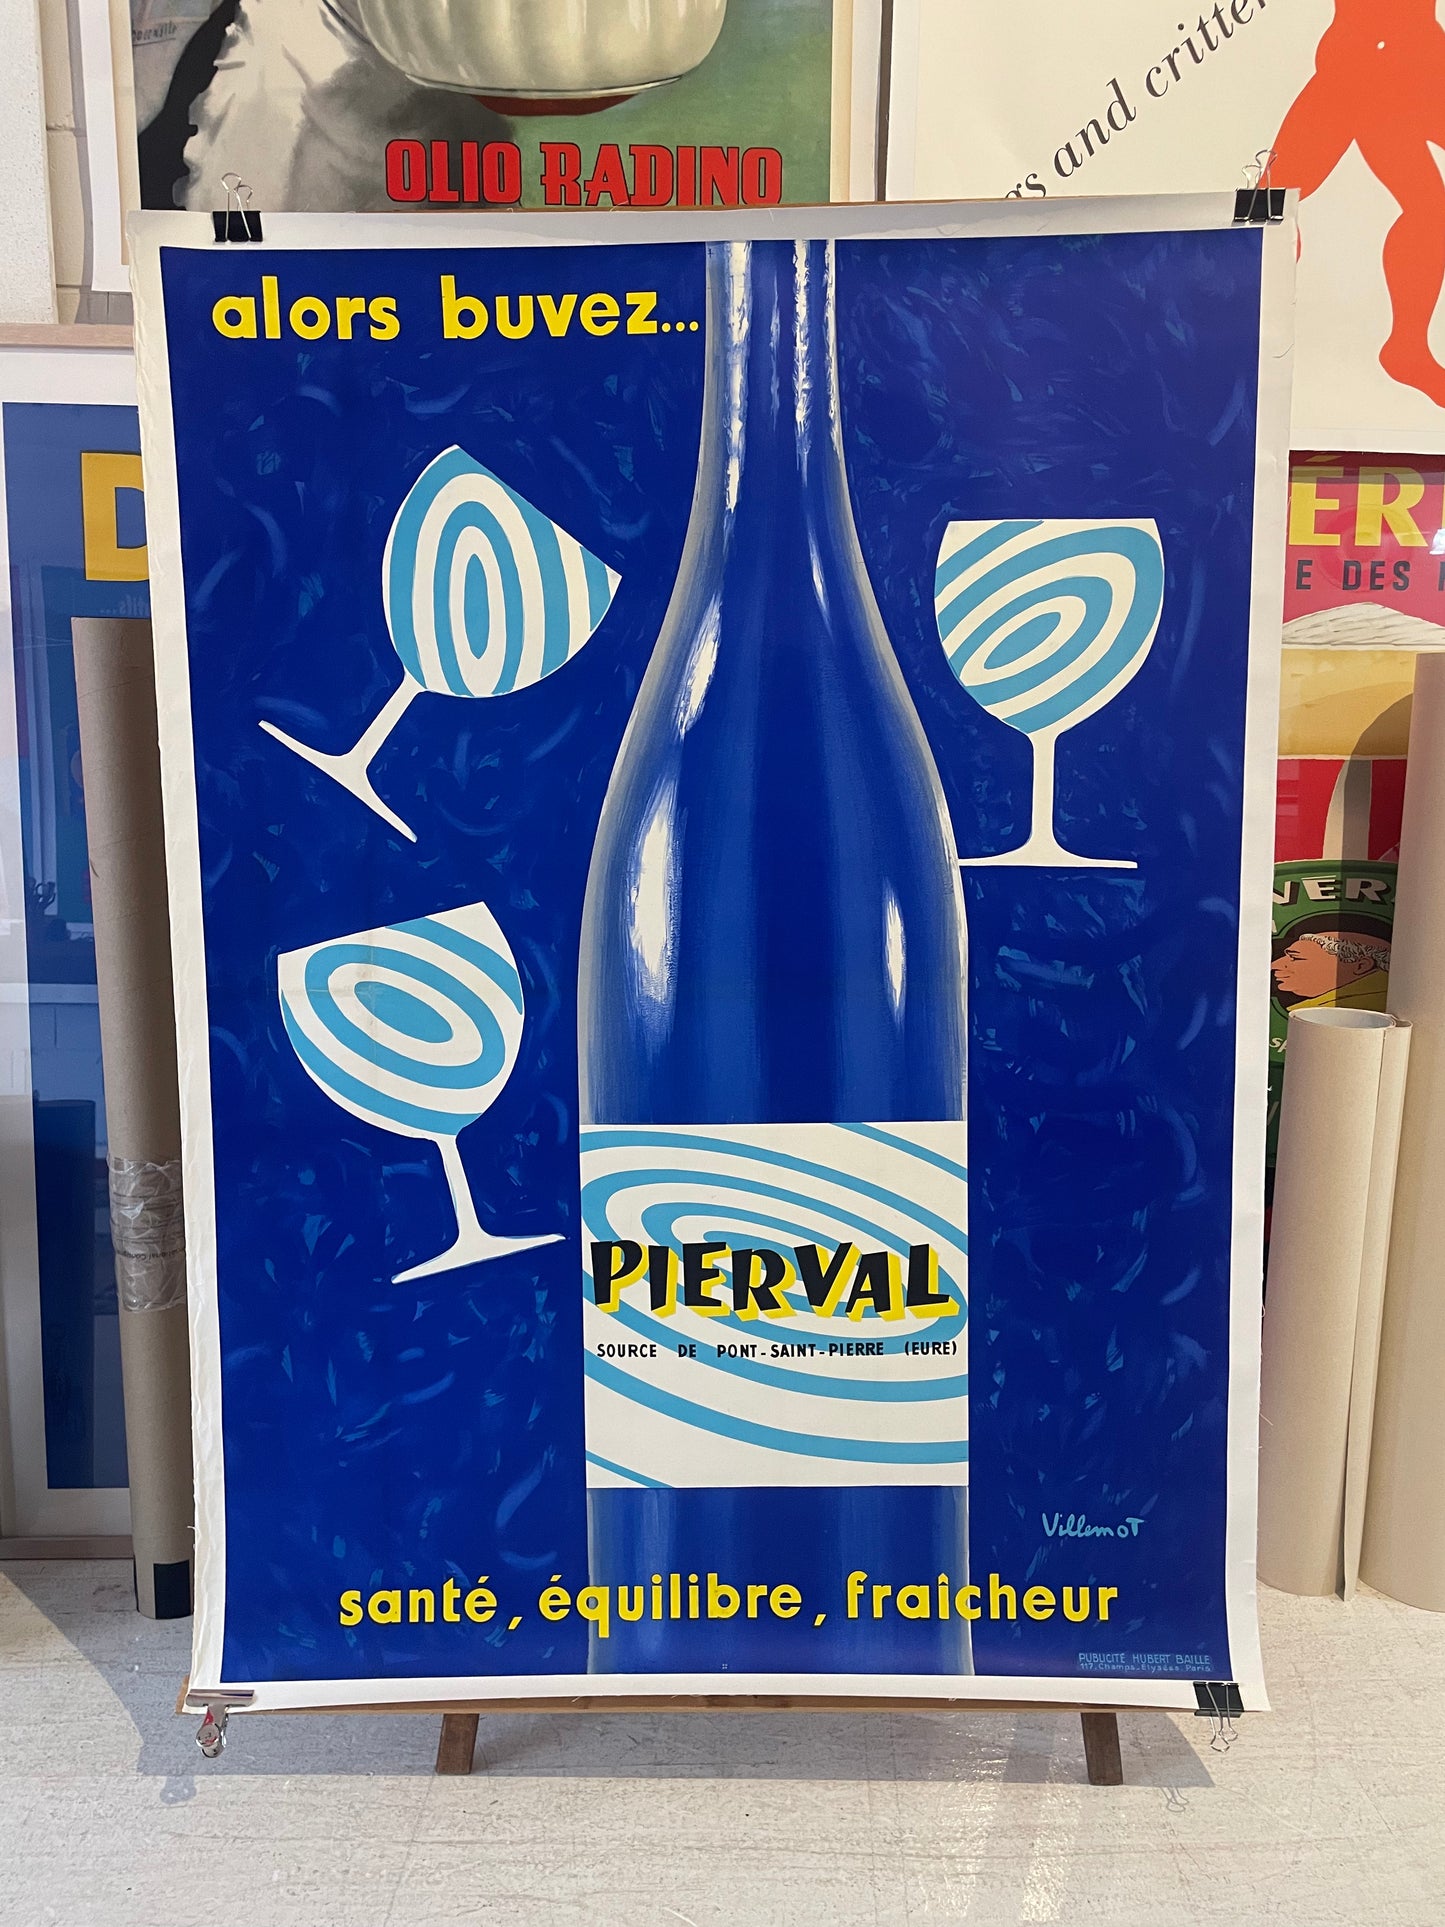 Pierval Mineral Water by Villemot